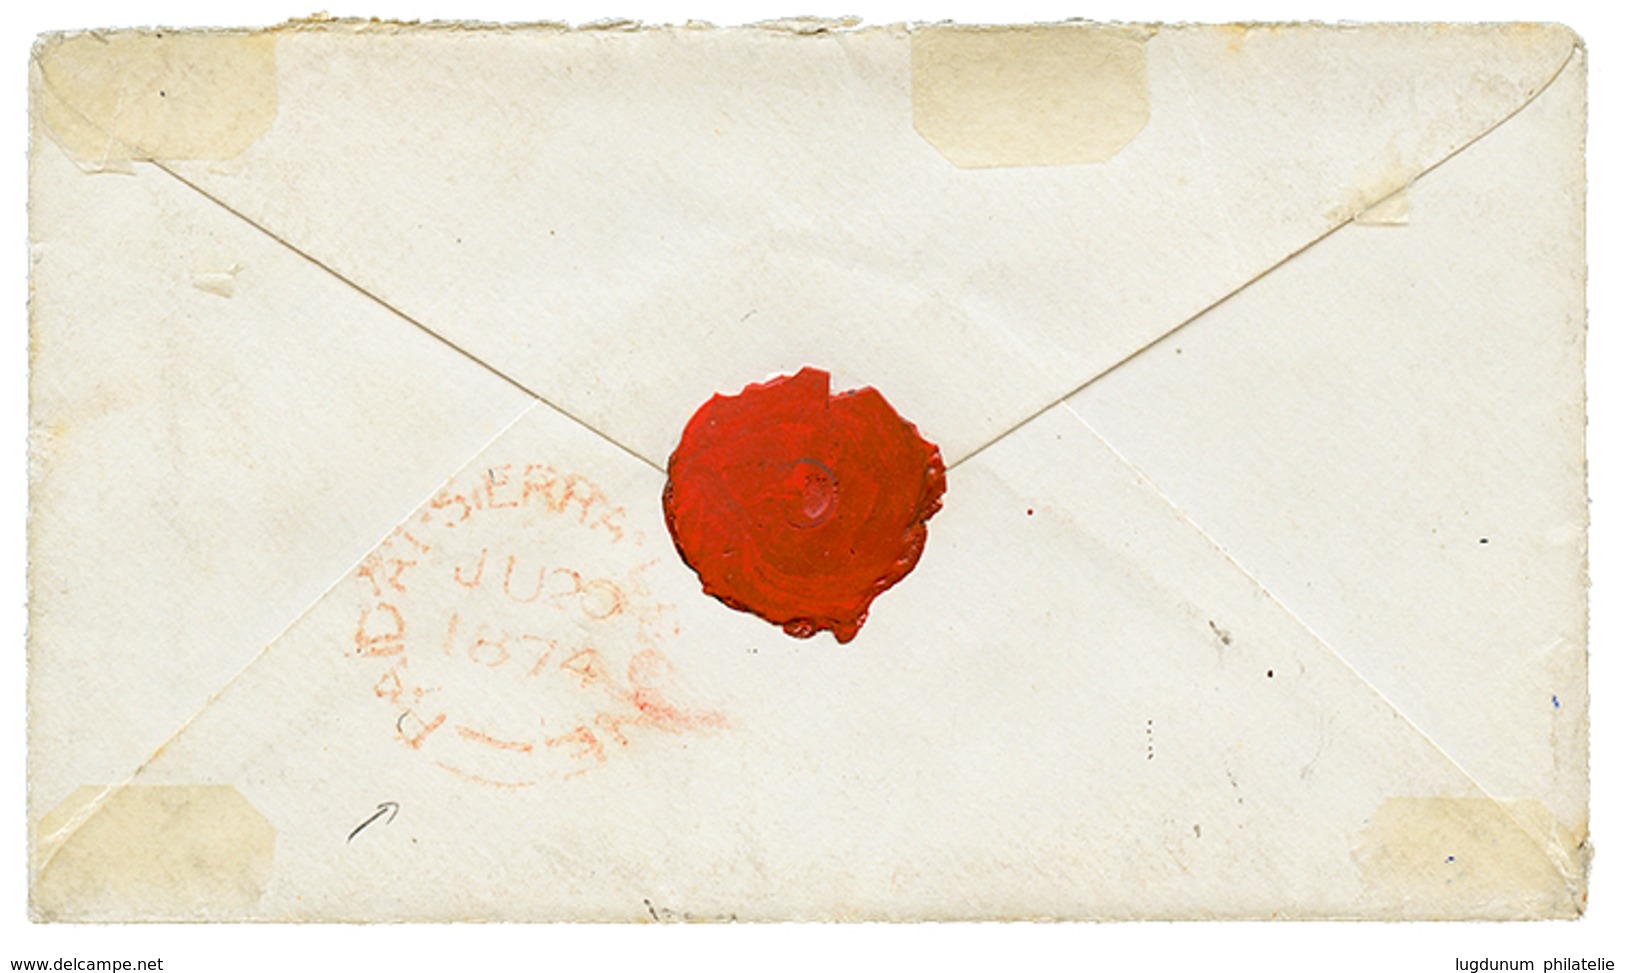 743 SIERRA-LEONE : 1874 1d Canc. B31 + "1" Red Tax Marking On Envelope To BRISTISH SHERBRO. Rare Internal Mail. Vvf. - Sierra Leone (...-1960)